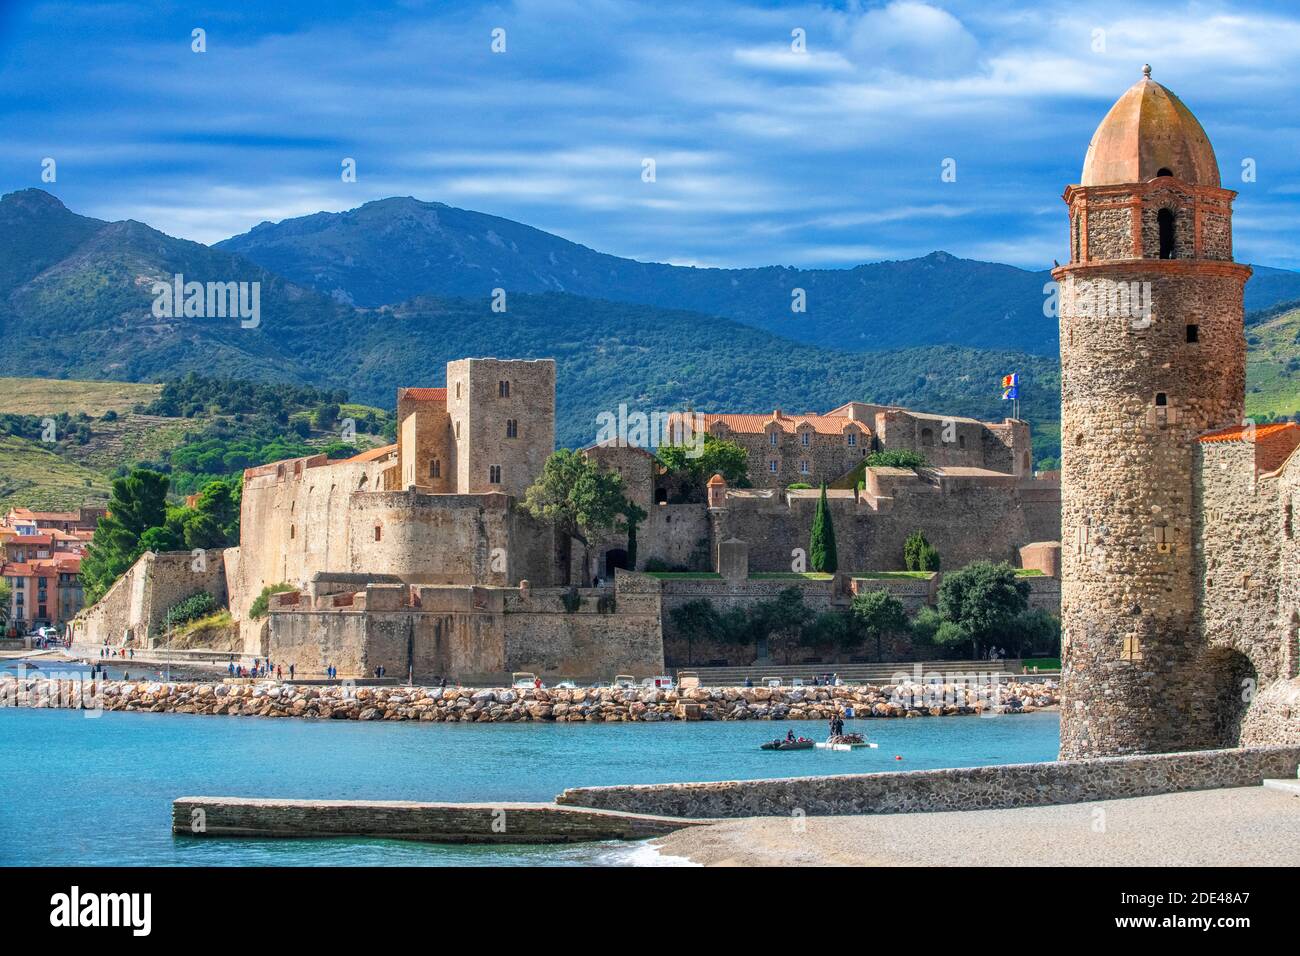 Real castillo de Collioure y paisaje playa costera de la pintoresca aldea de Colliure, cerca de Perpiñán al sur de Francia Languedoc-Roussillon C Foto de stock